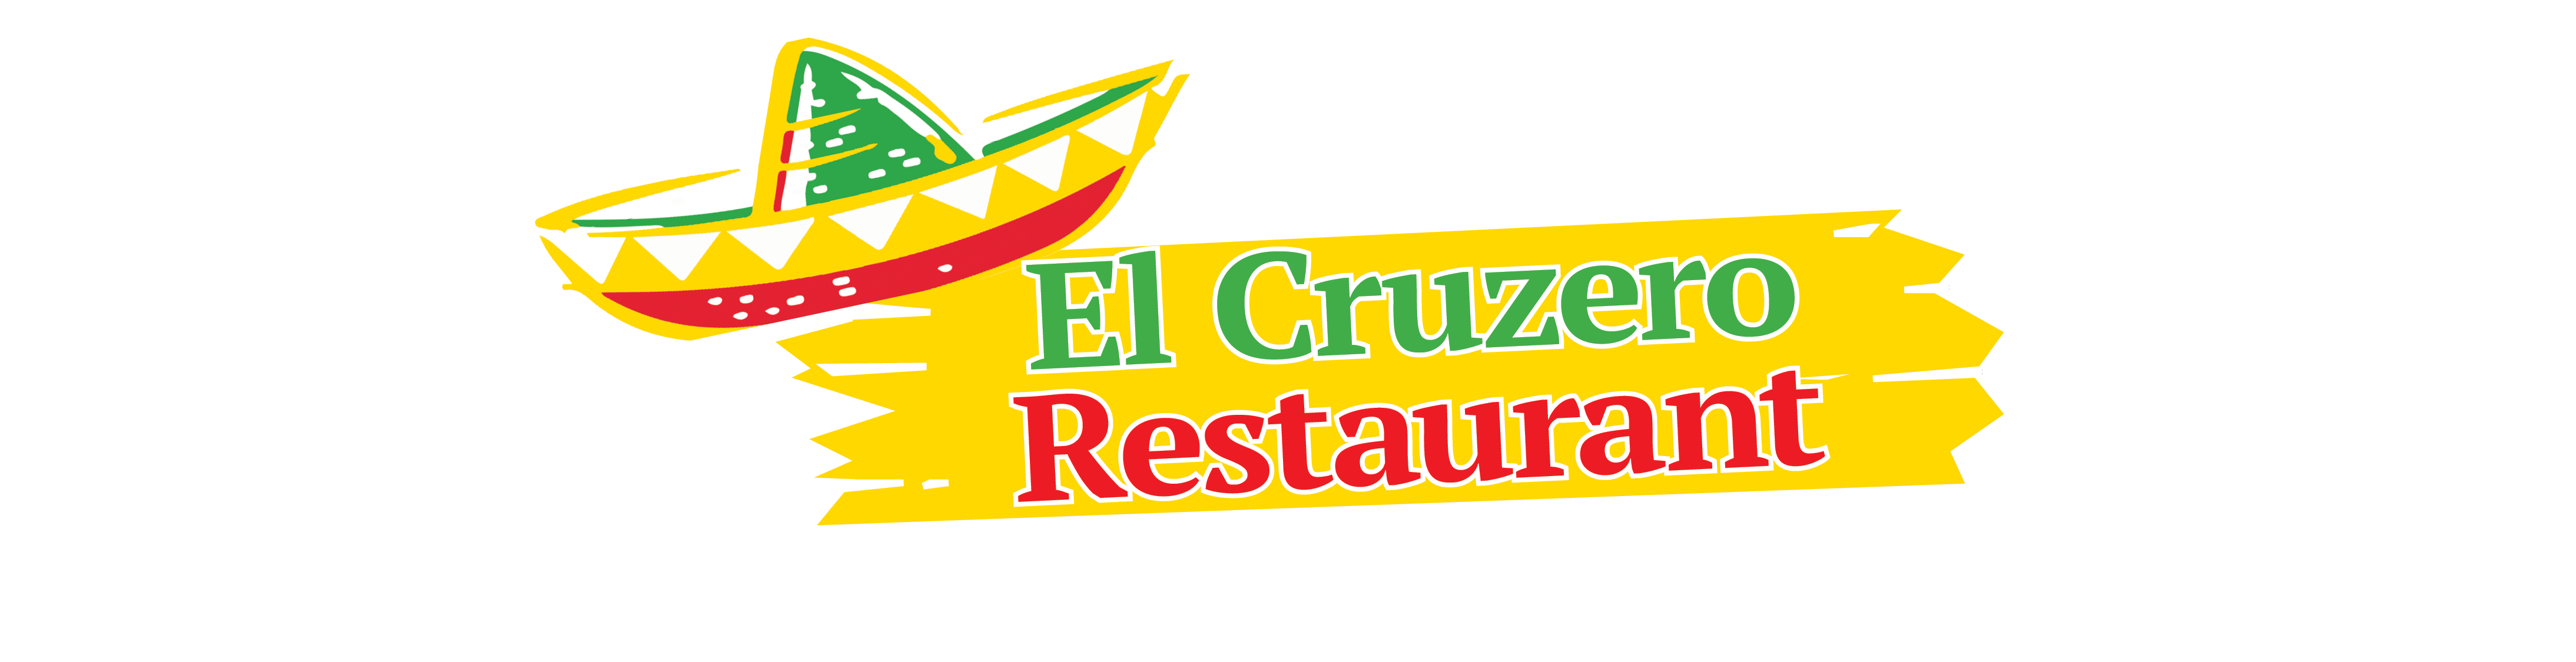 El Cruzero Restaurant